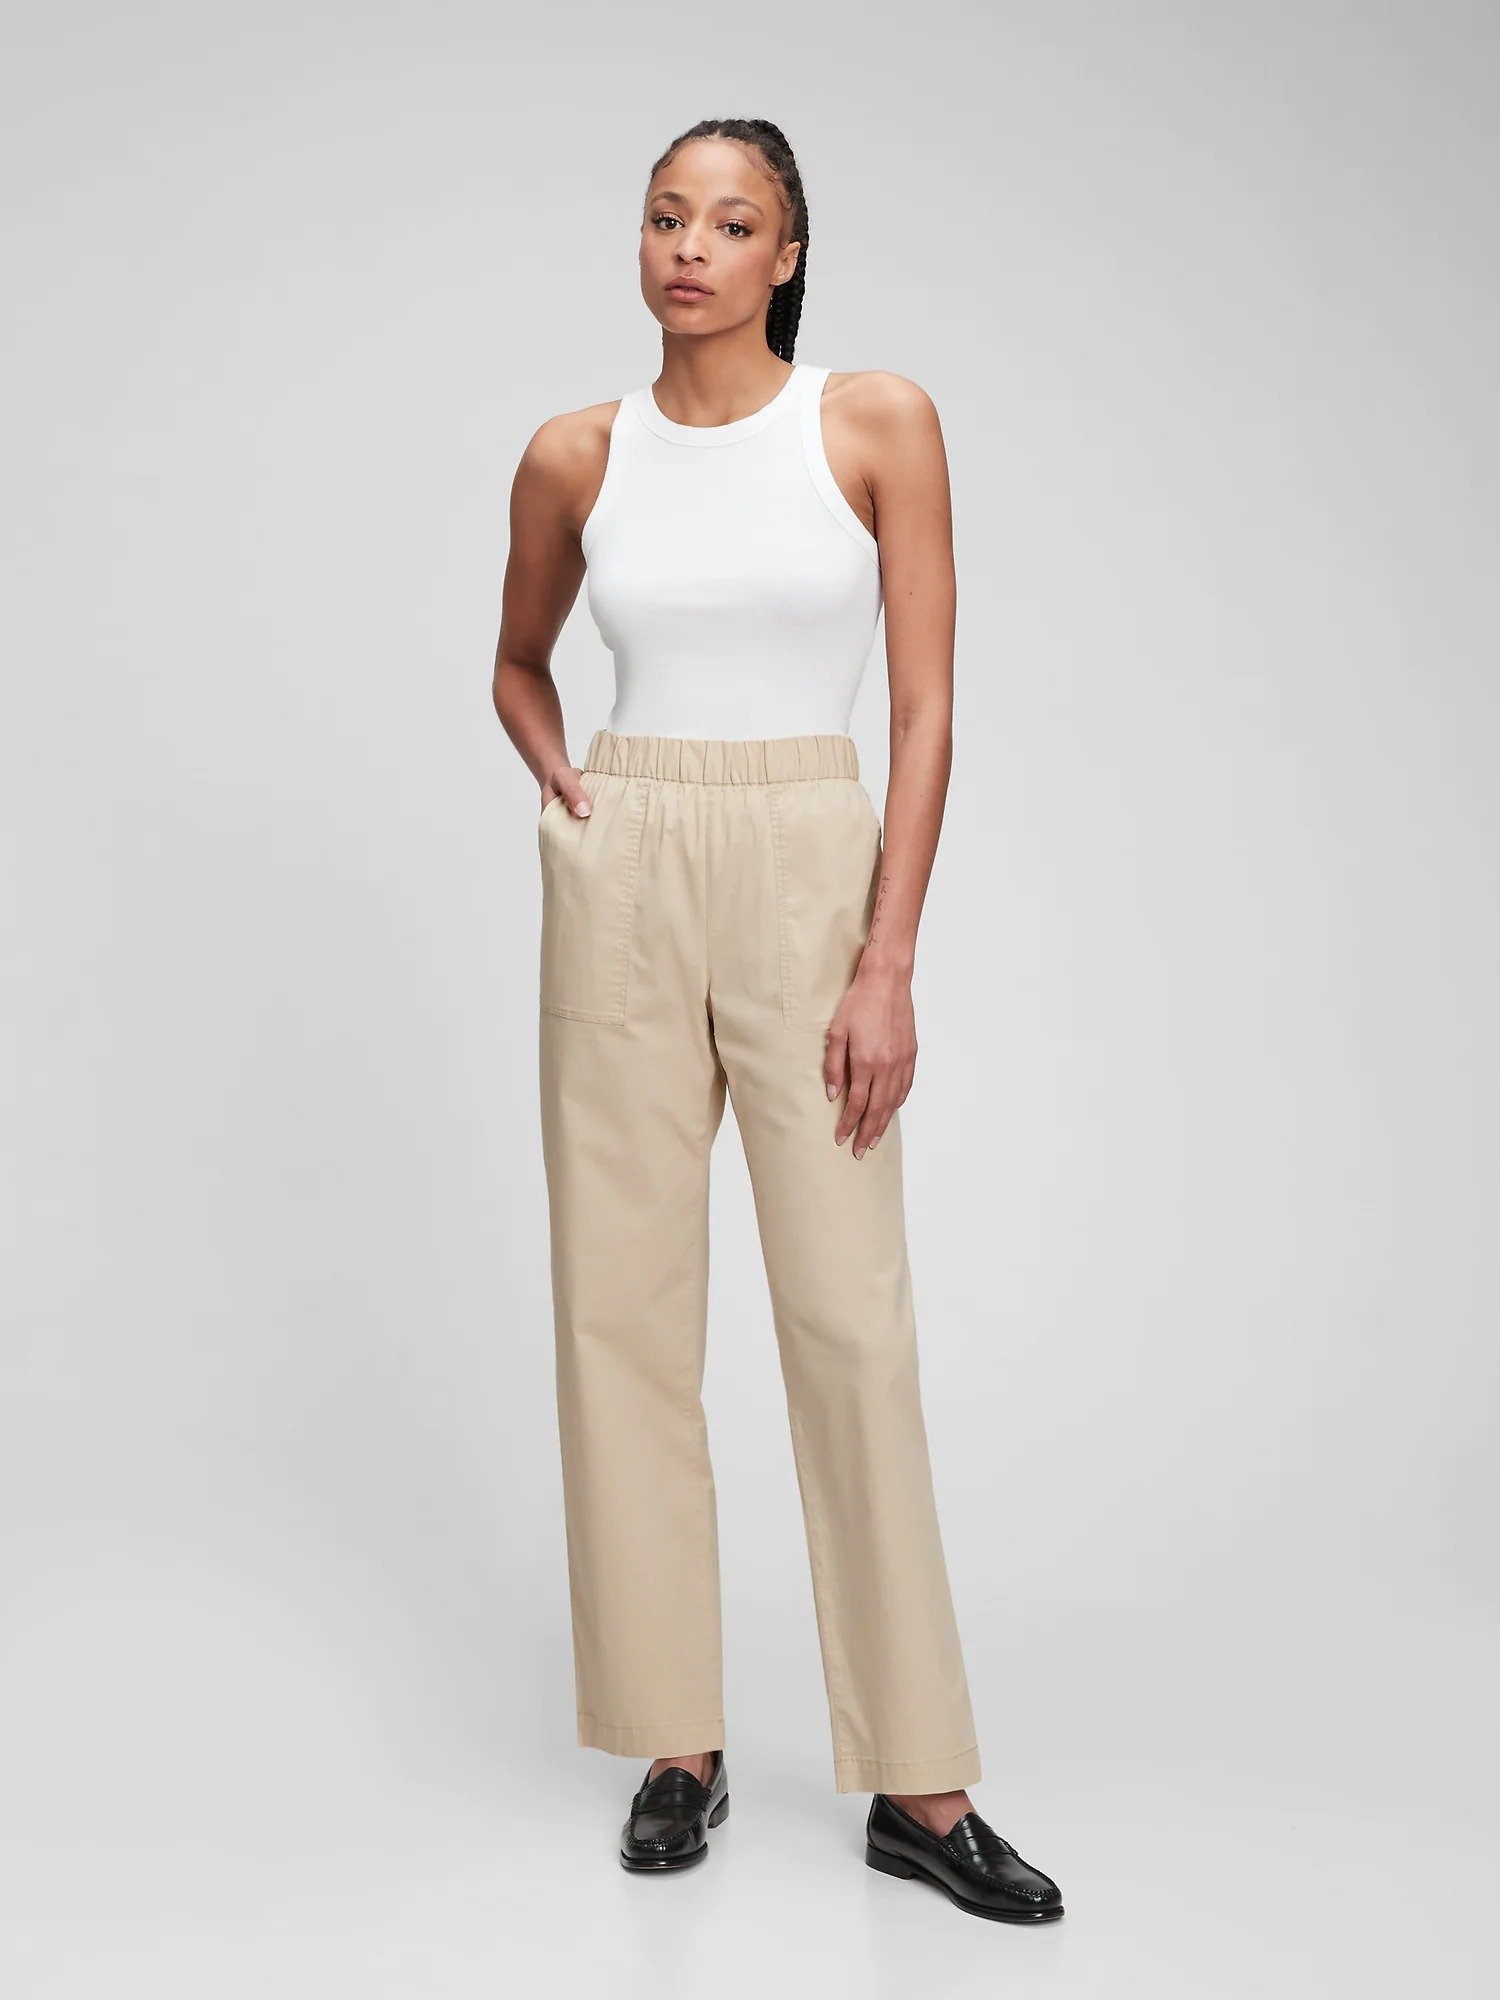 Off-Duty Washwell™ Khaki Pantolon product image